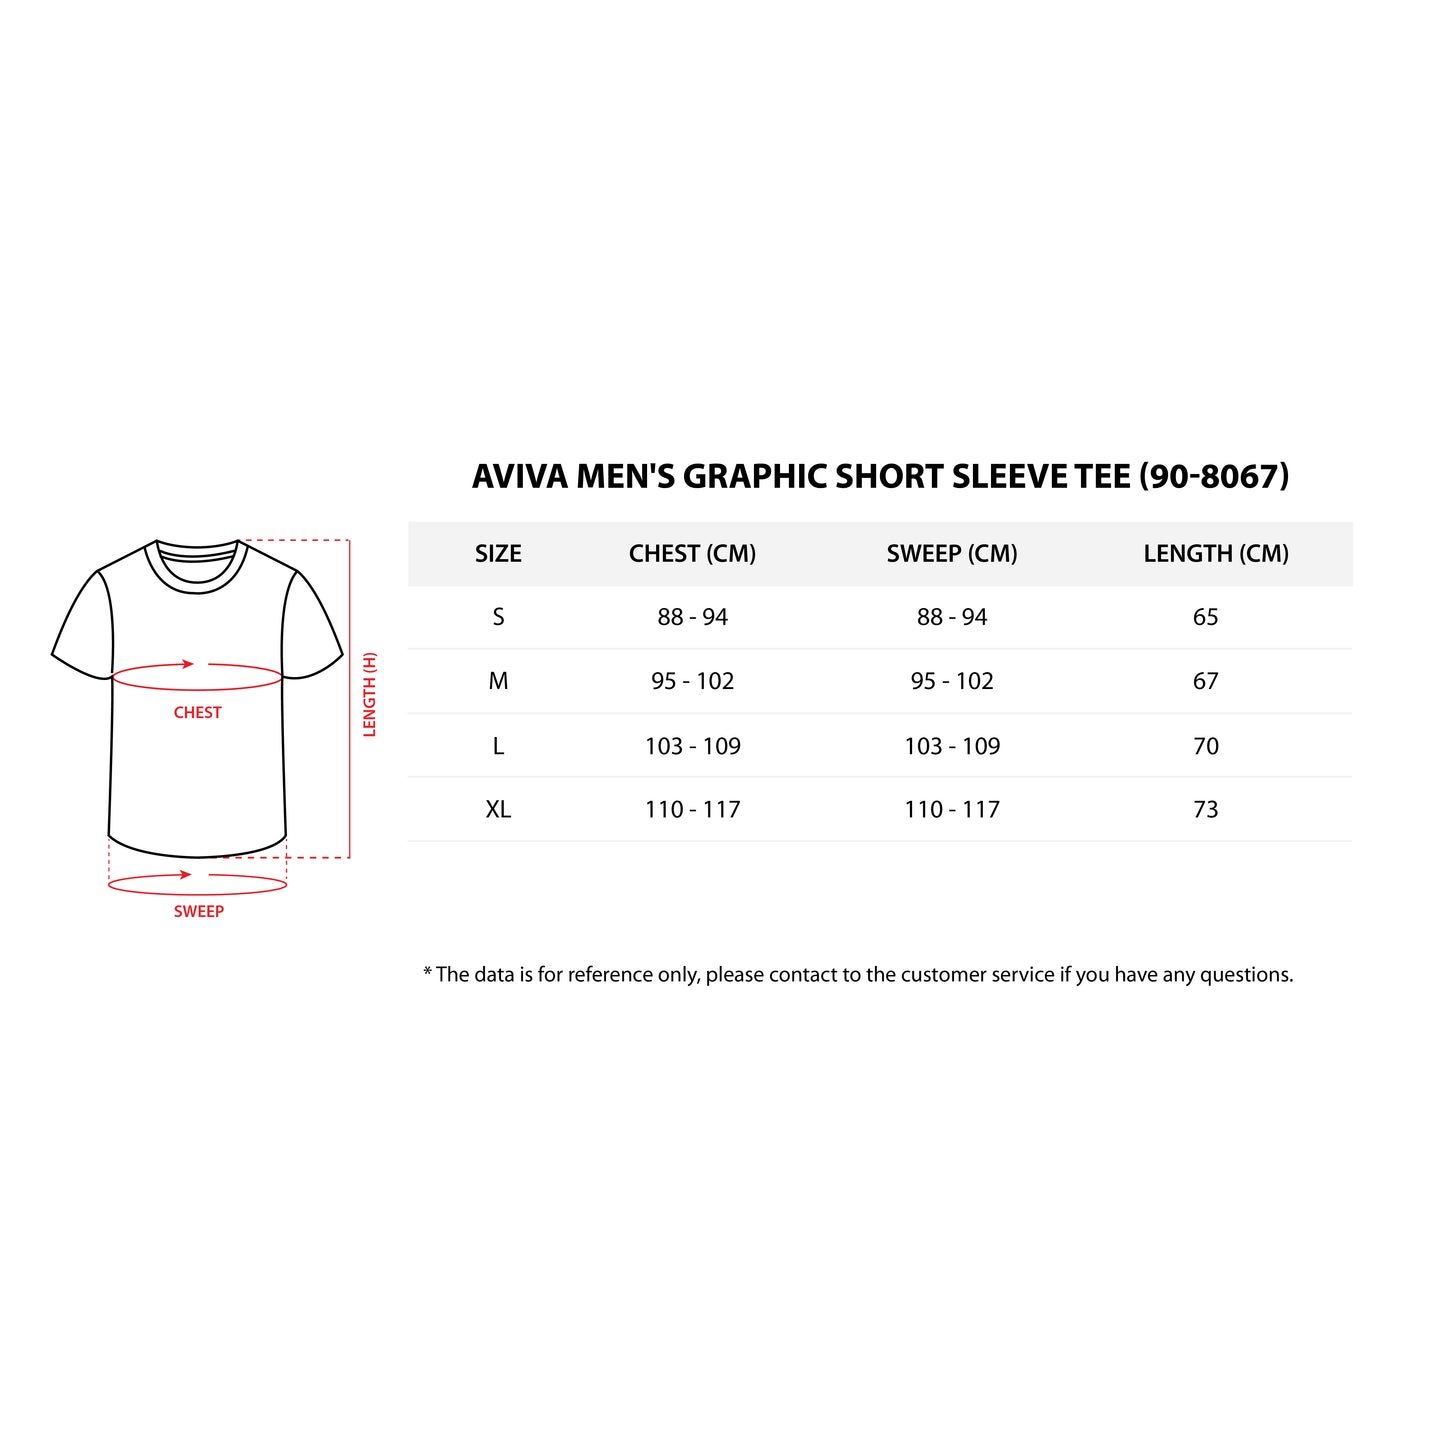 Aviva Men's Graphic Short Sleeve Tee (90-8067)